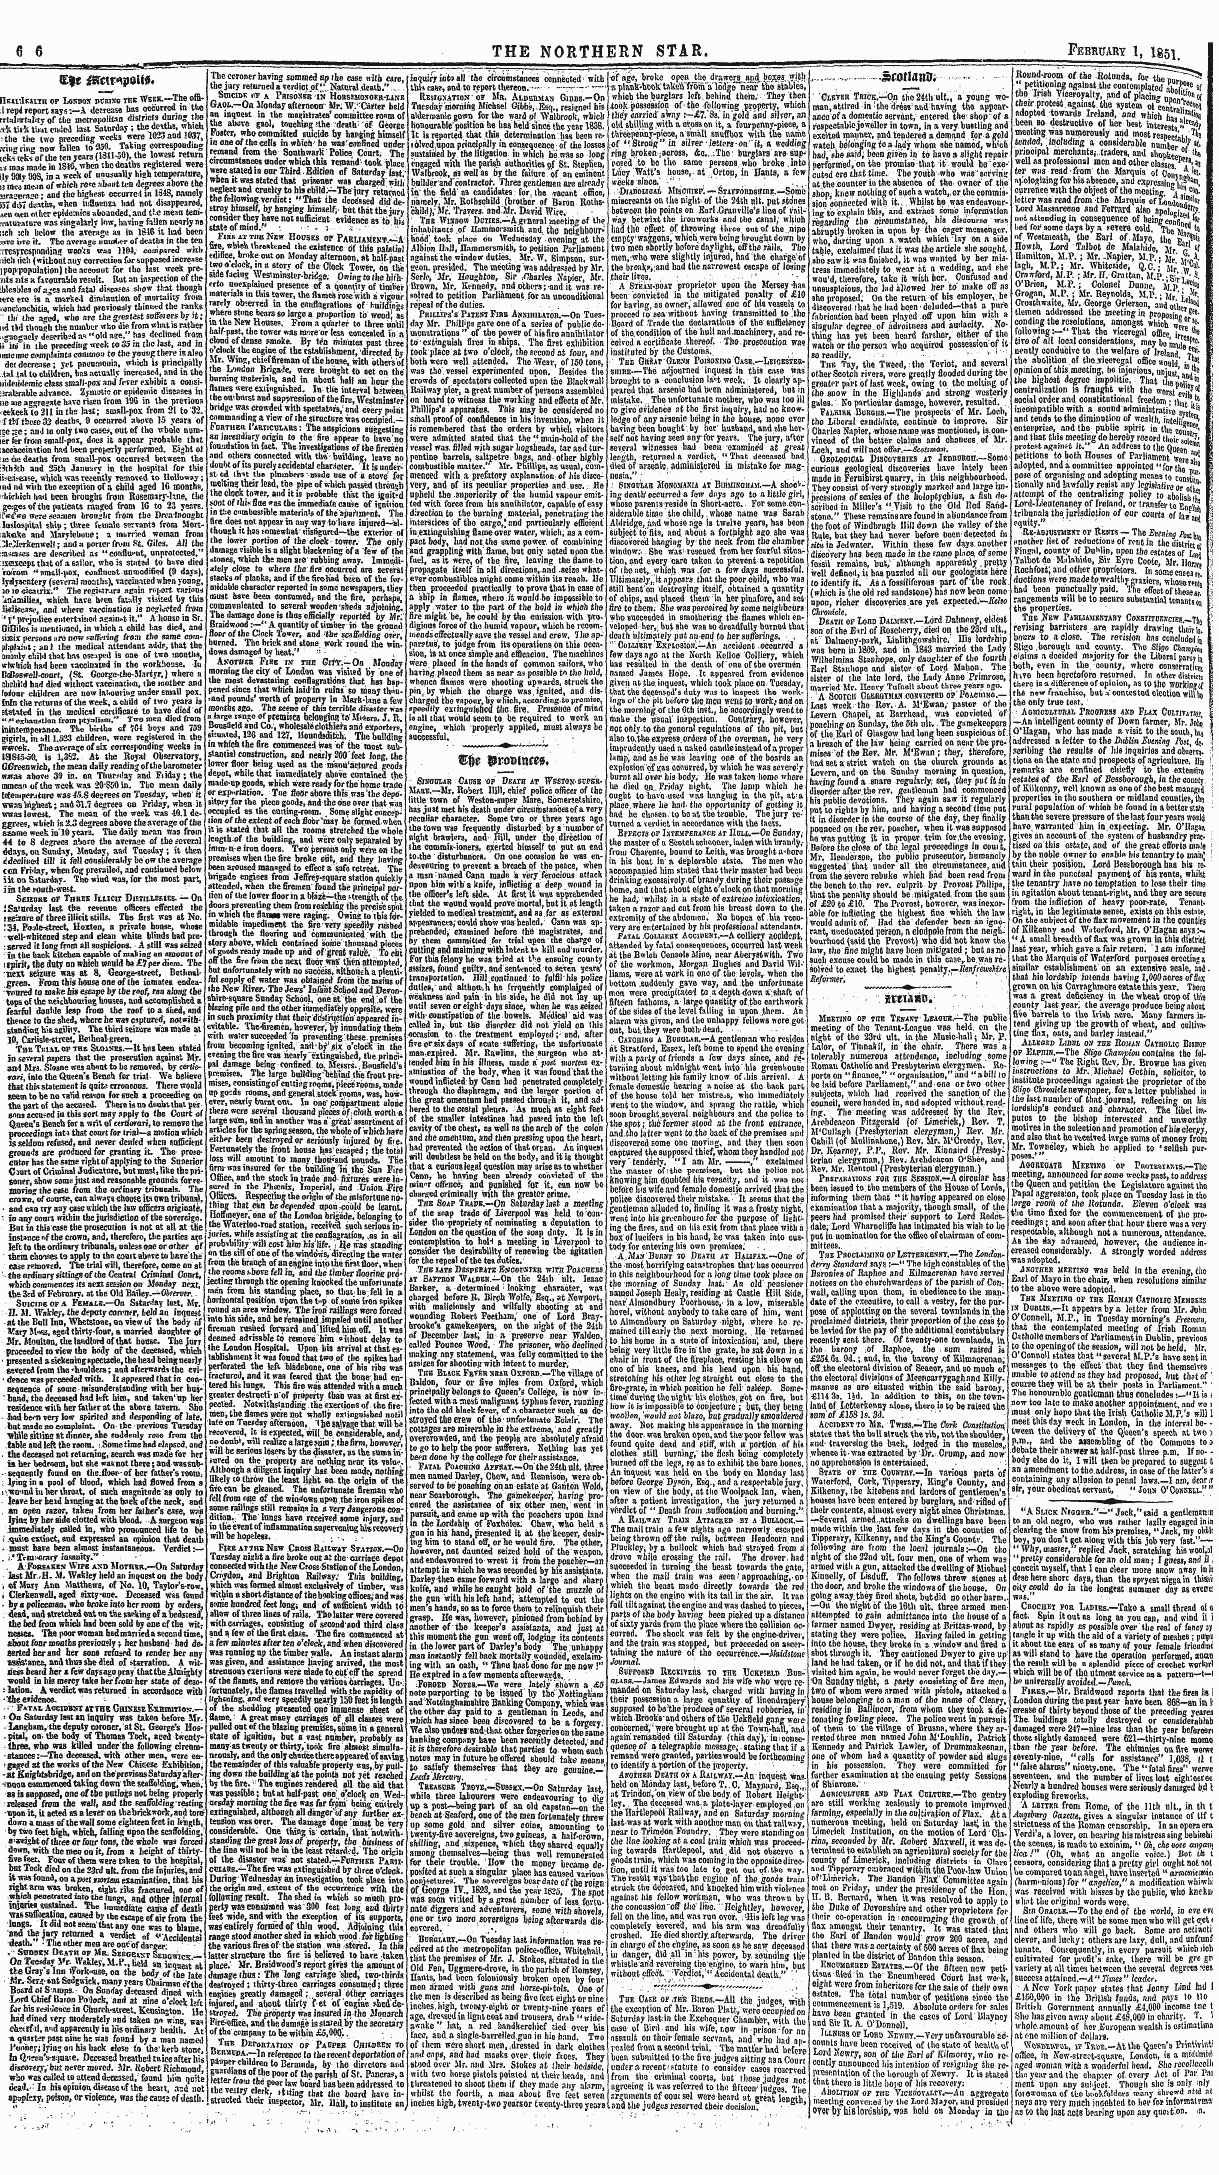 Northern Star (1837-1852): jS F Y, 3rd edition - Sincular Cause Of Death At Weston- Super...